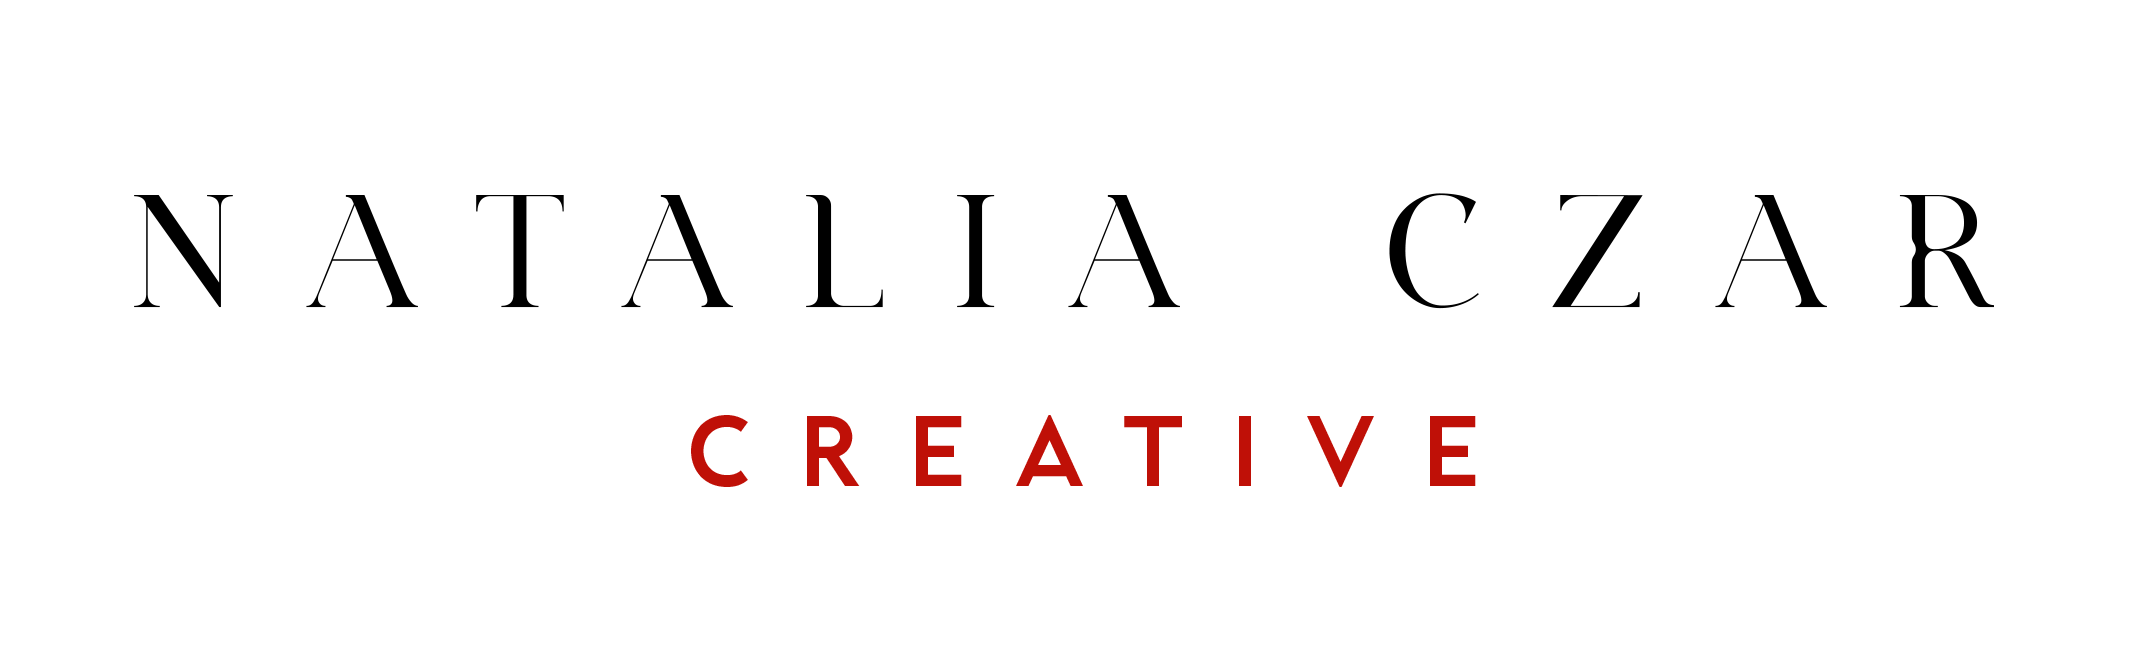 Natalia-Czar-Creative-logo.png